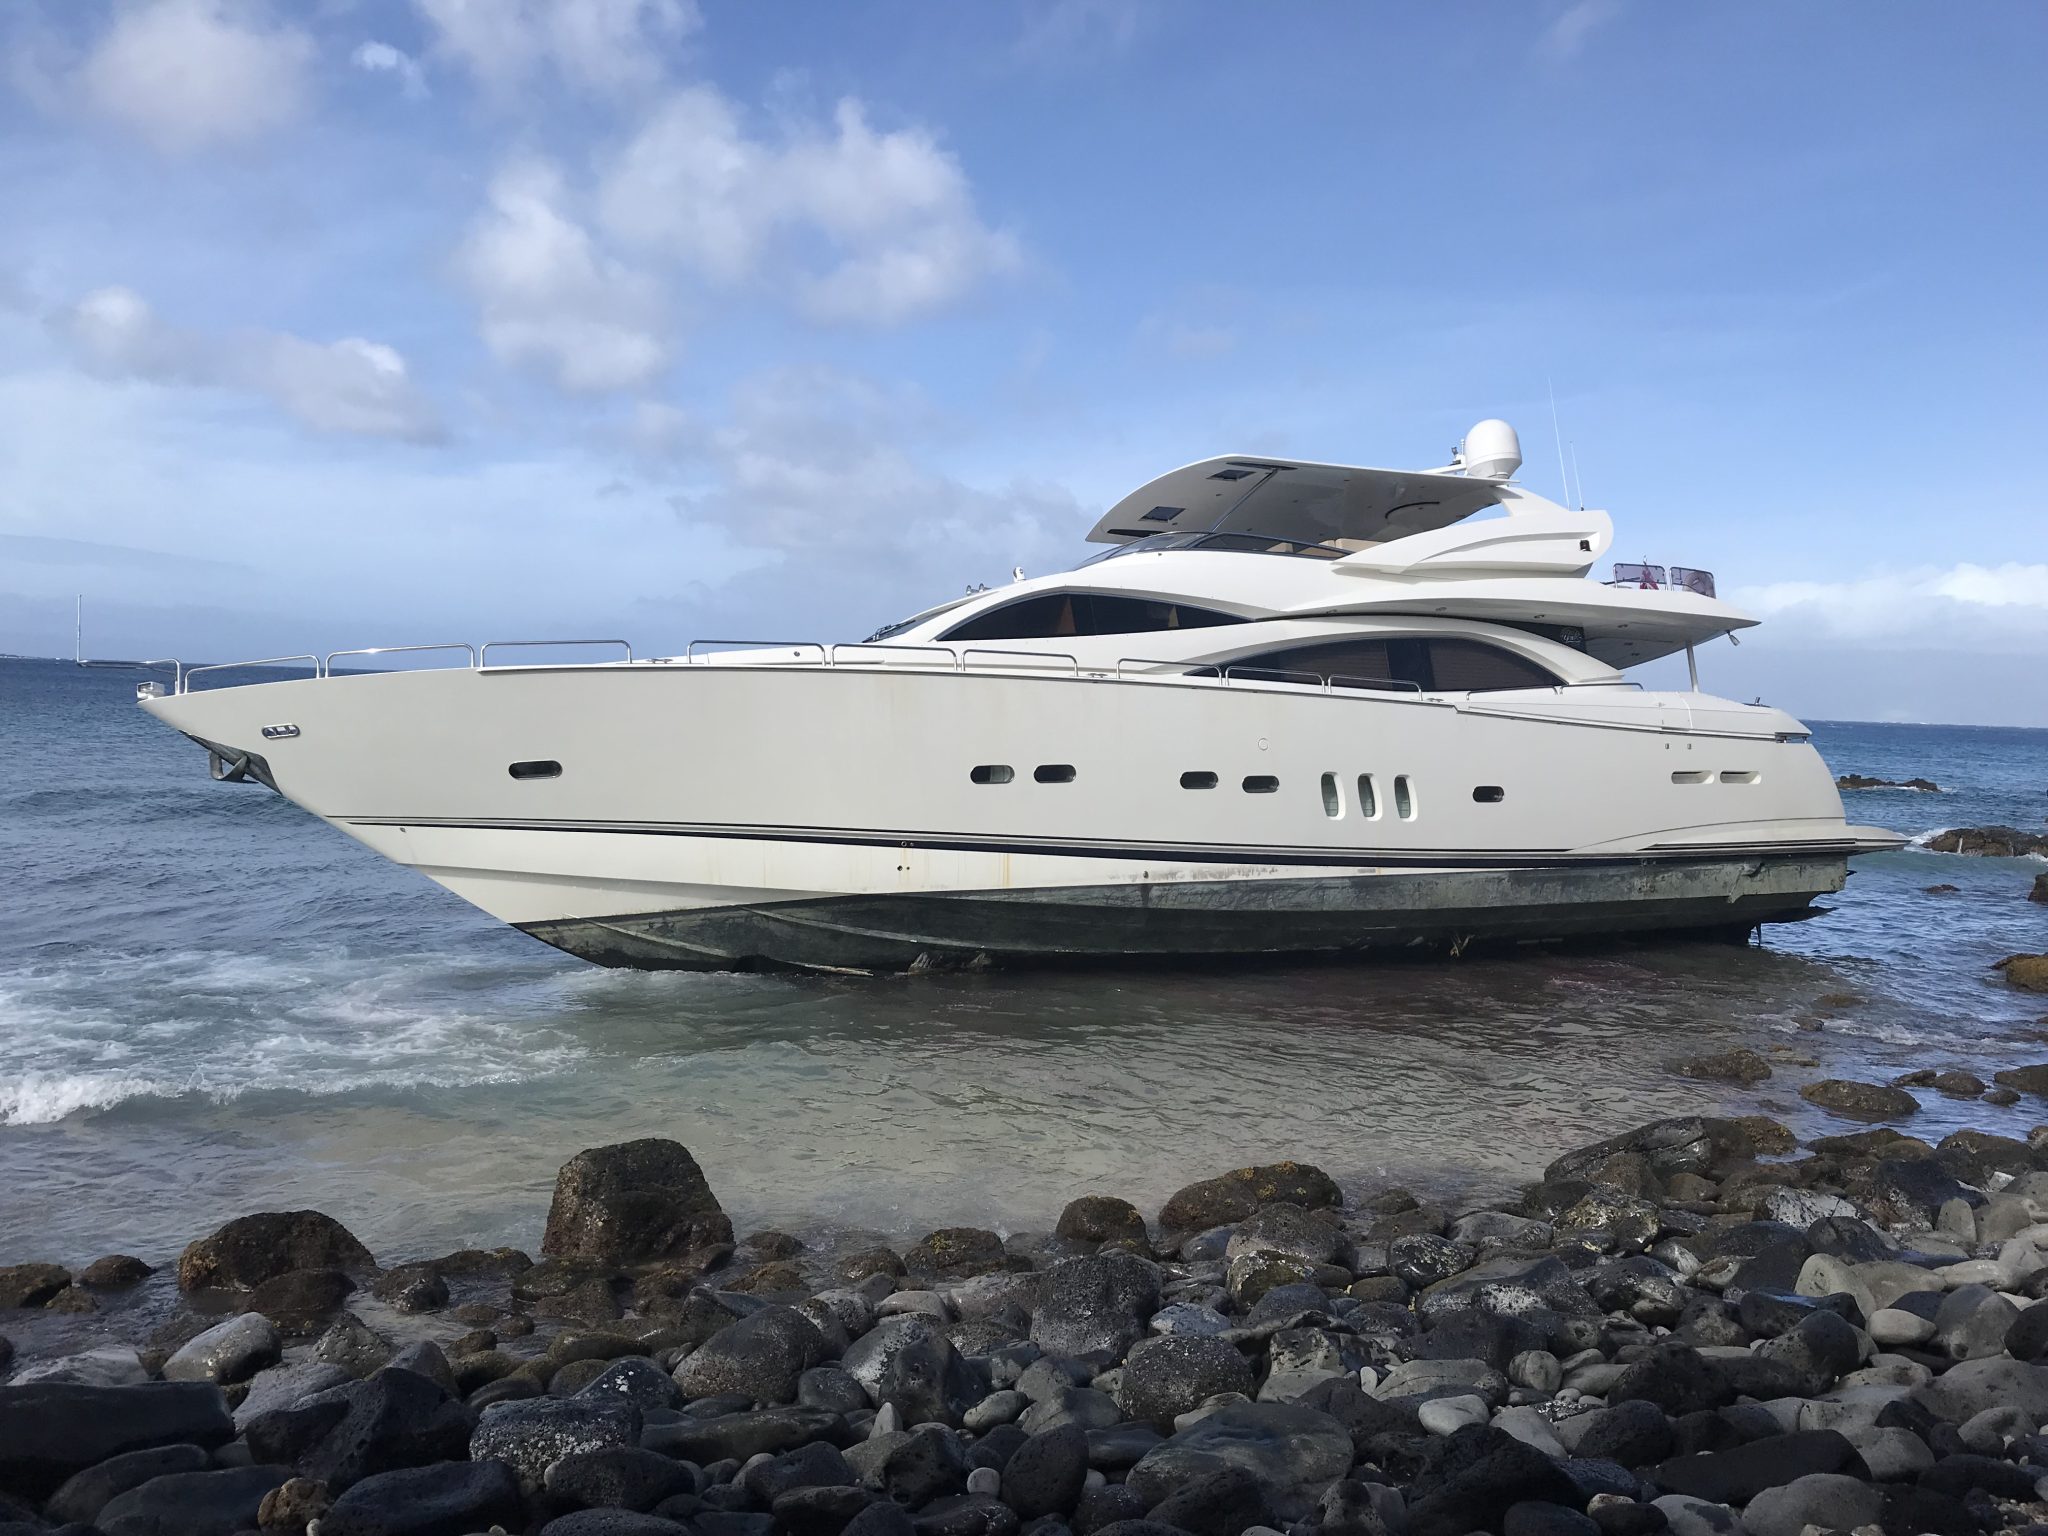 Grounded Luxury Yacht Spills Diesel in Maui’s Honolua Bay